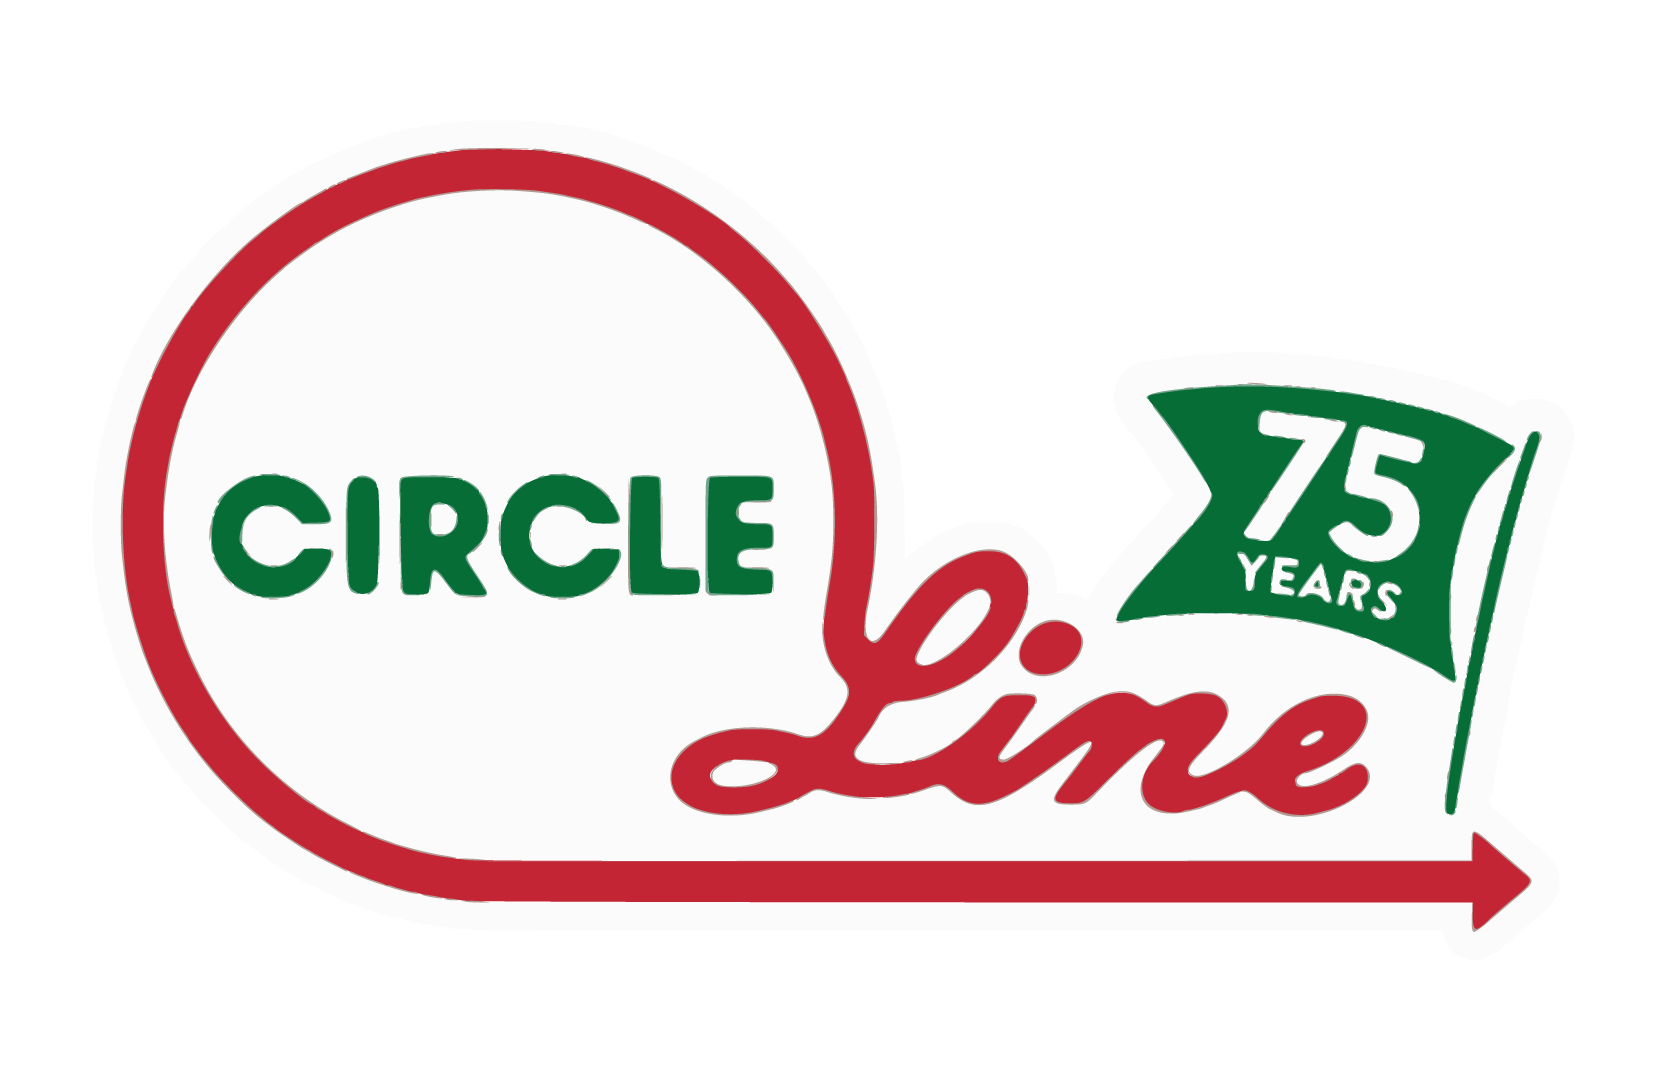 nyc cruise circle line